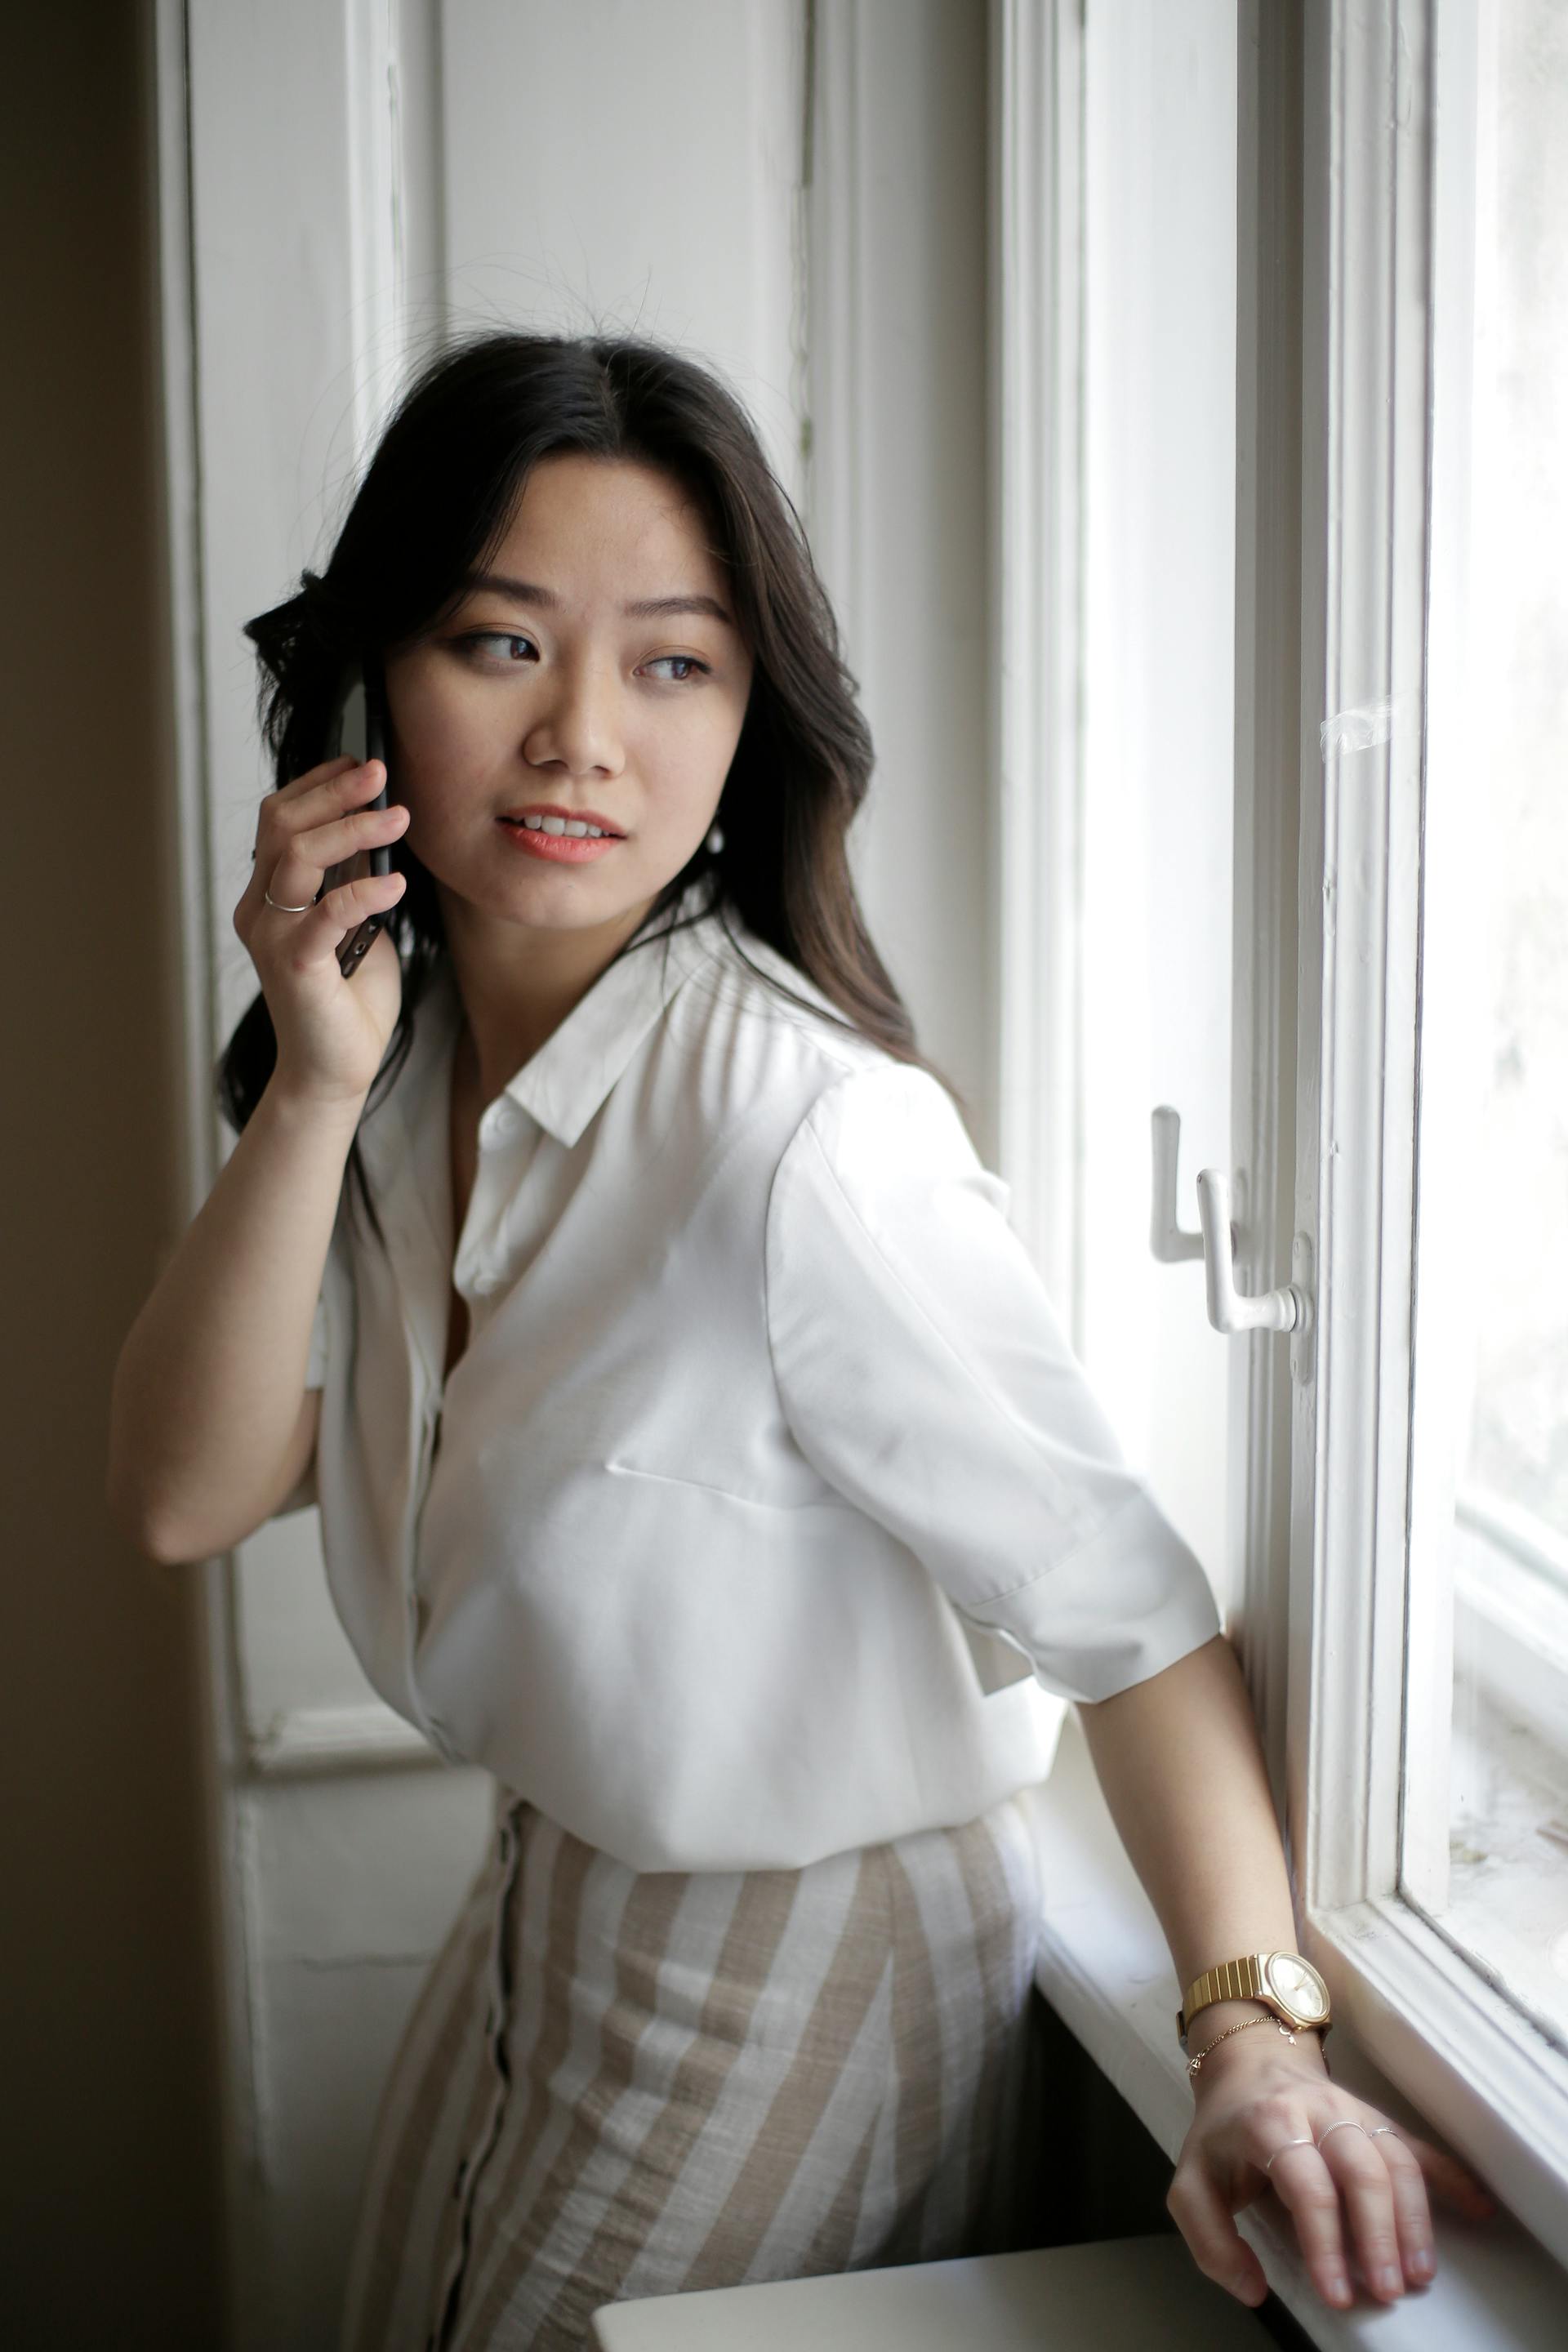 A woman making a phone call | Source: Pexels